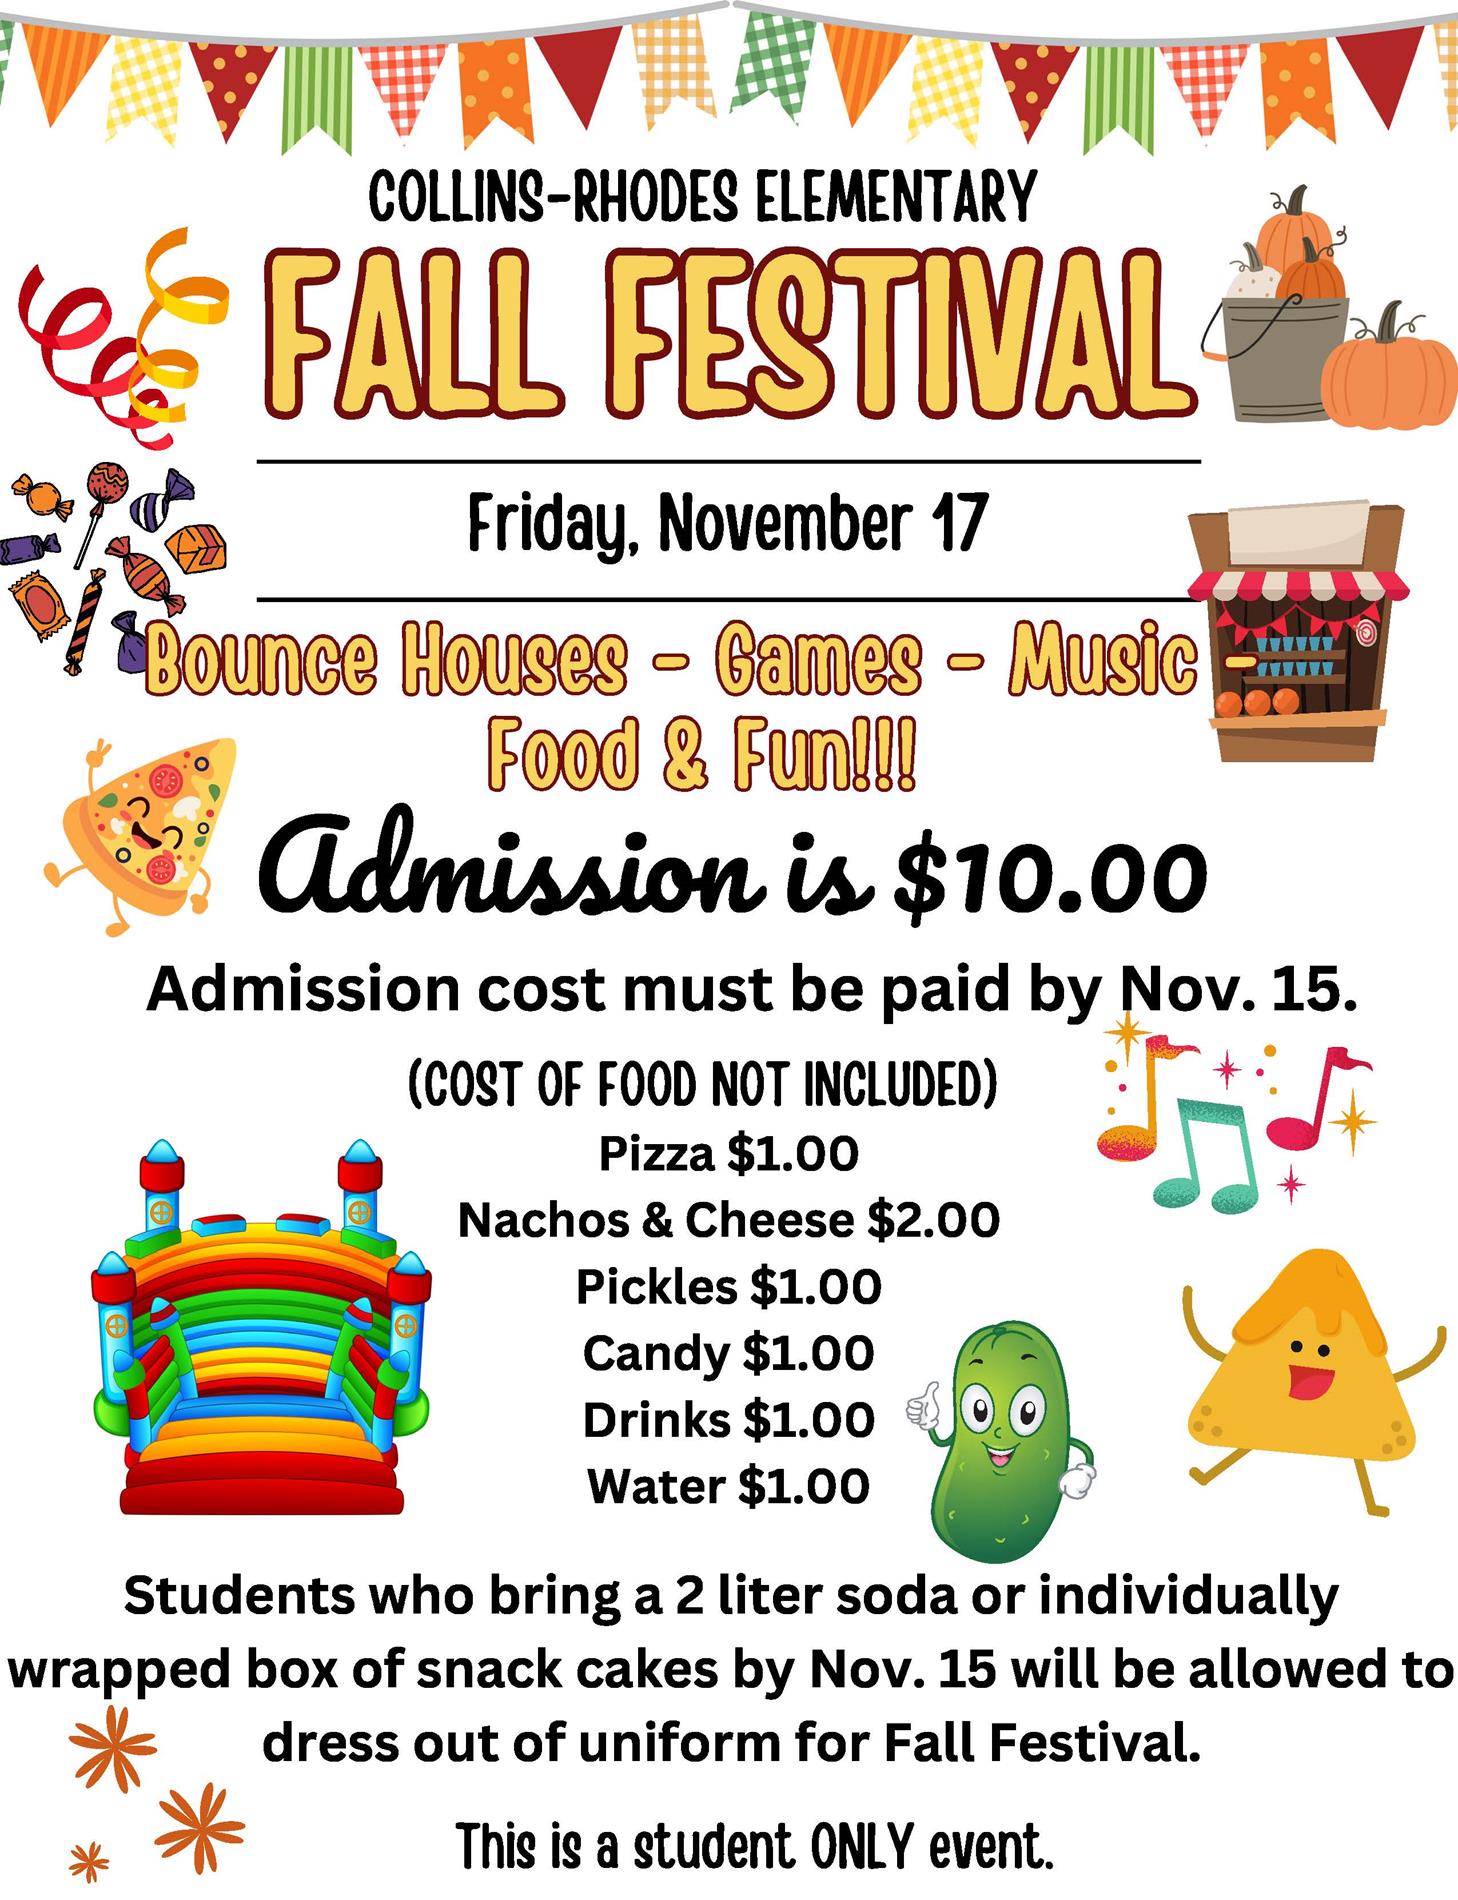 Fall Festival November 17, 2023
Admission $10.00